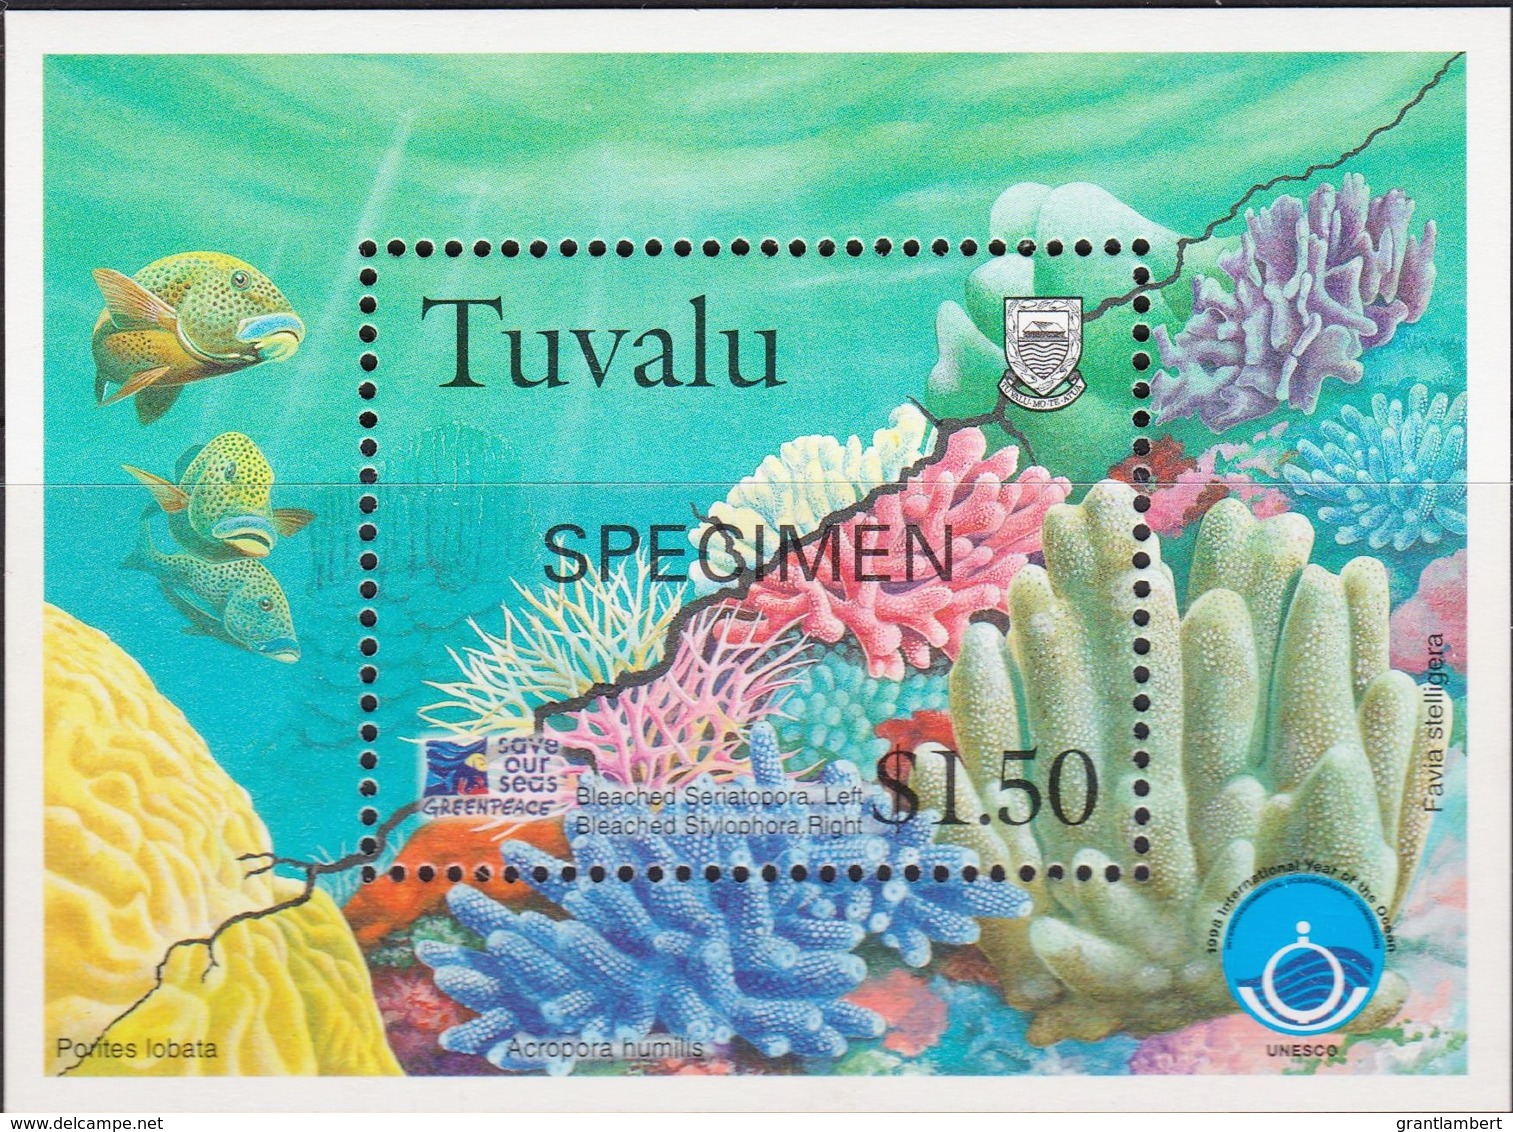 Tuvalu 1998 Greenpeace - Save Our Sease SPECIMEN Minisheet MNH - Tuvalu